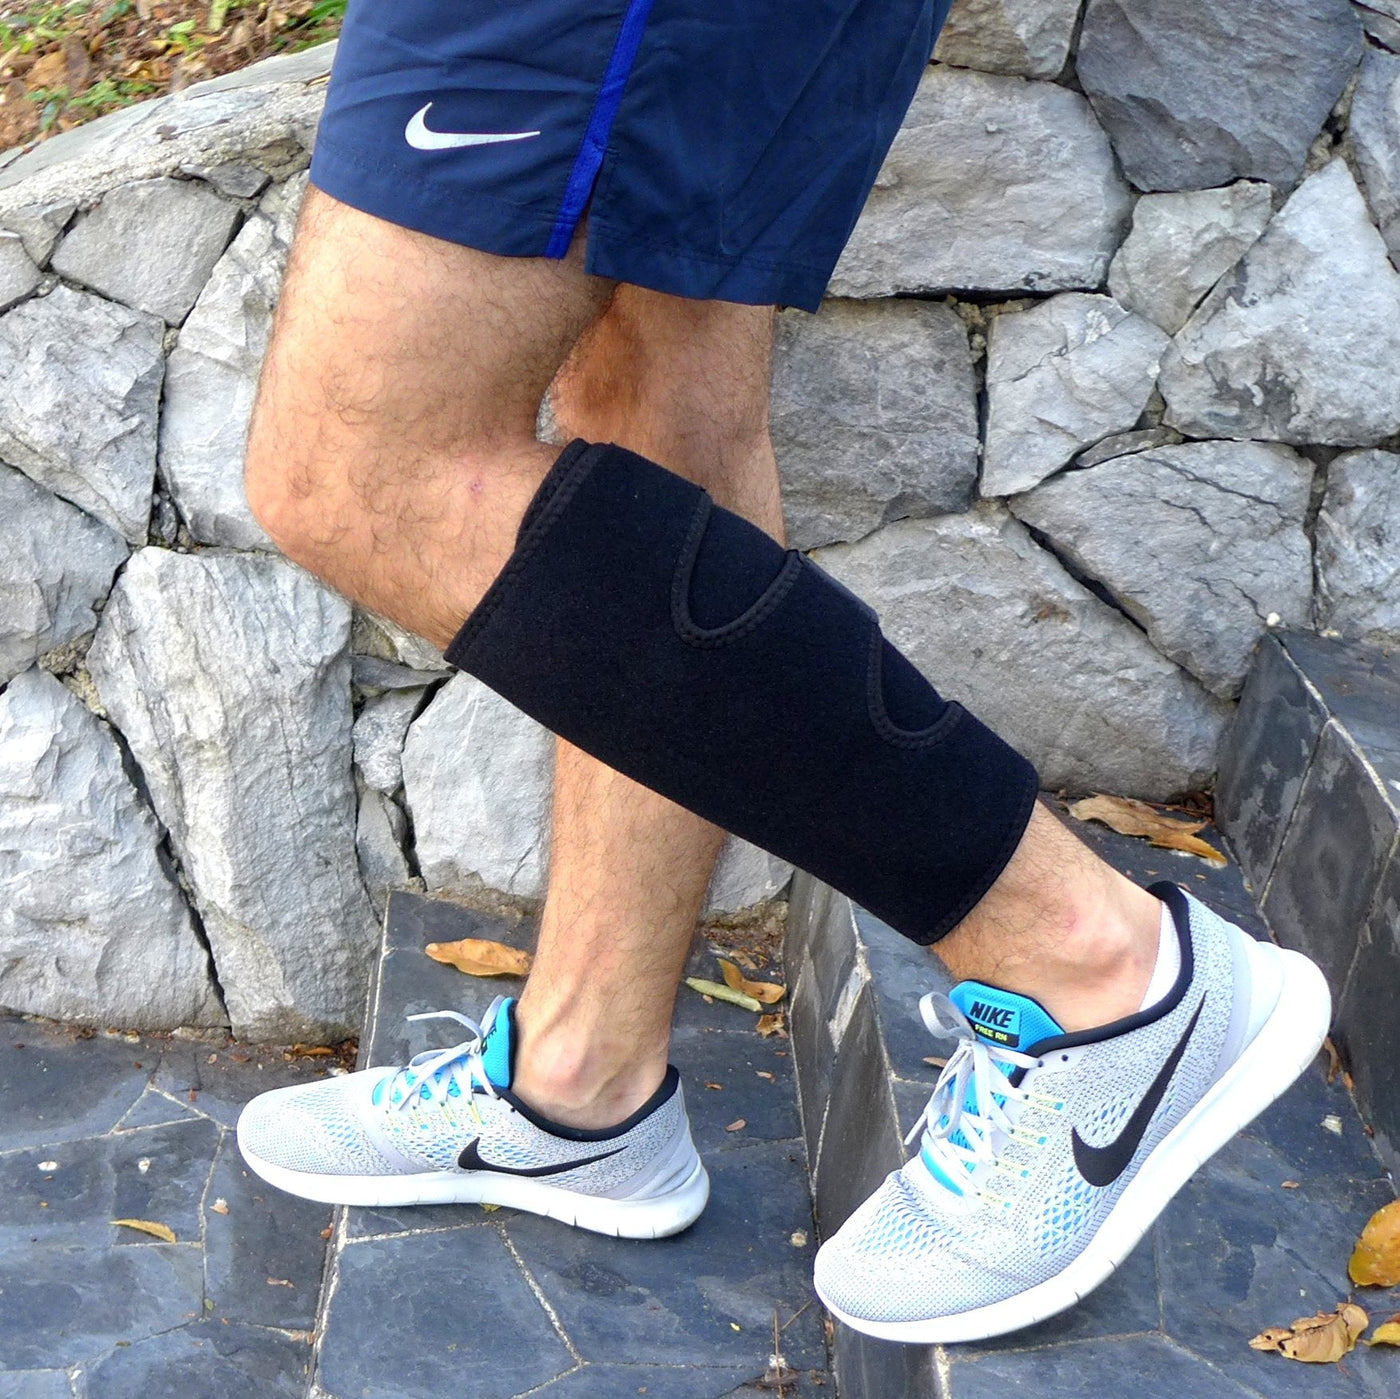 Calf Brace for Torn Calf Muscle and Shin Splint Relief - Calf Compression  Sleeve for Strain, Tear, Lower Leg Injury - Neoprene Runners Splints Wrap